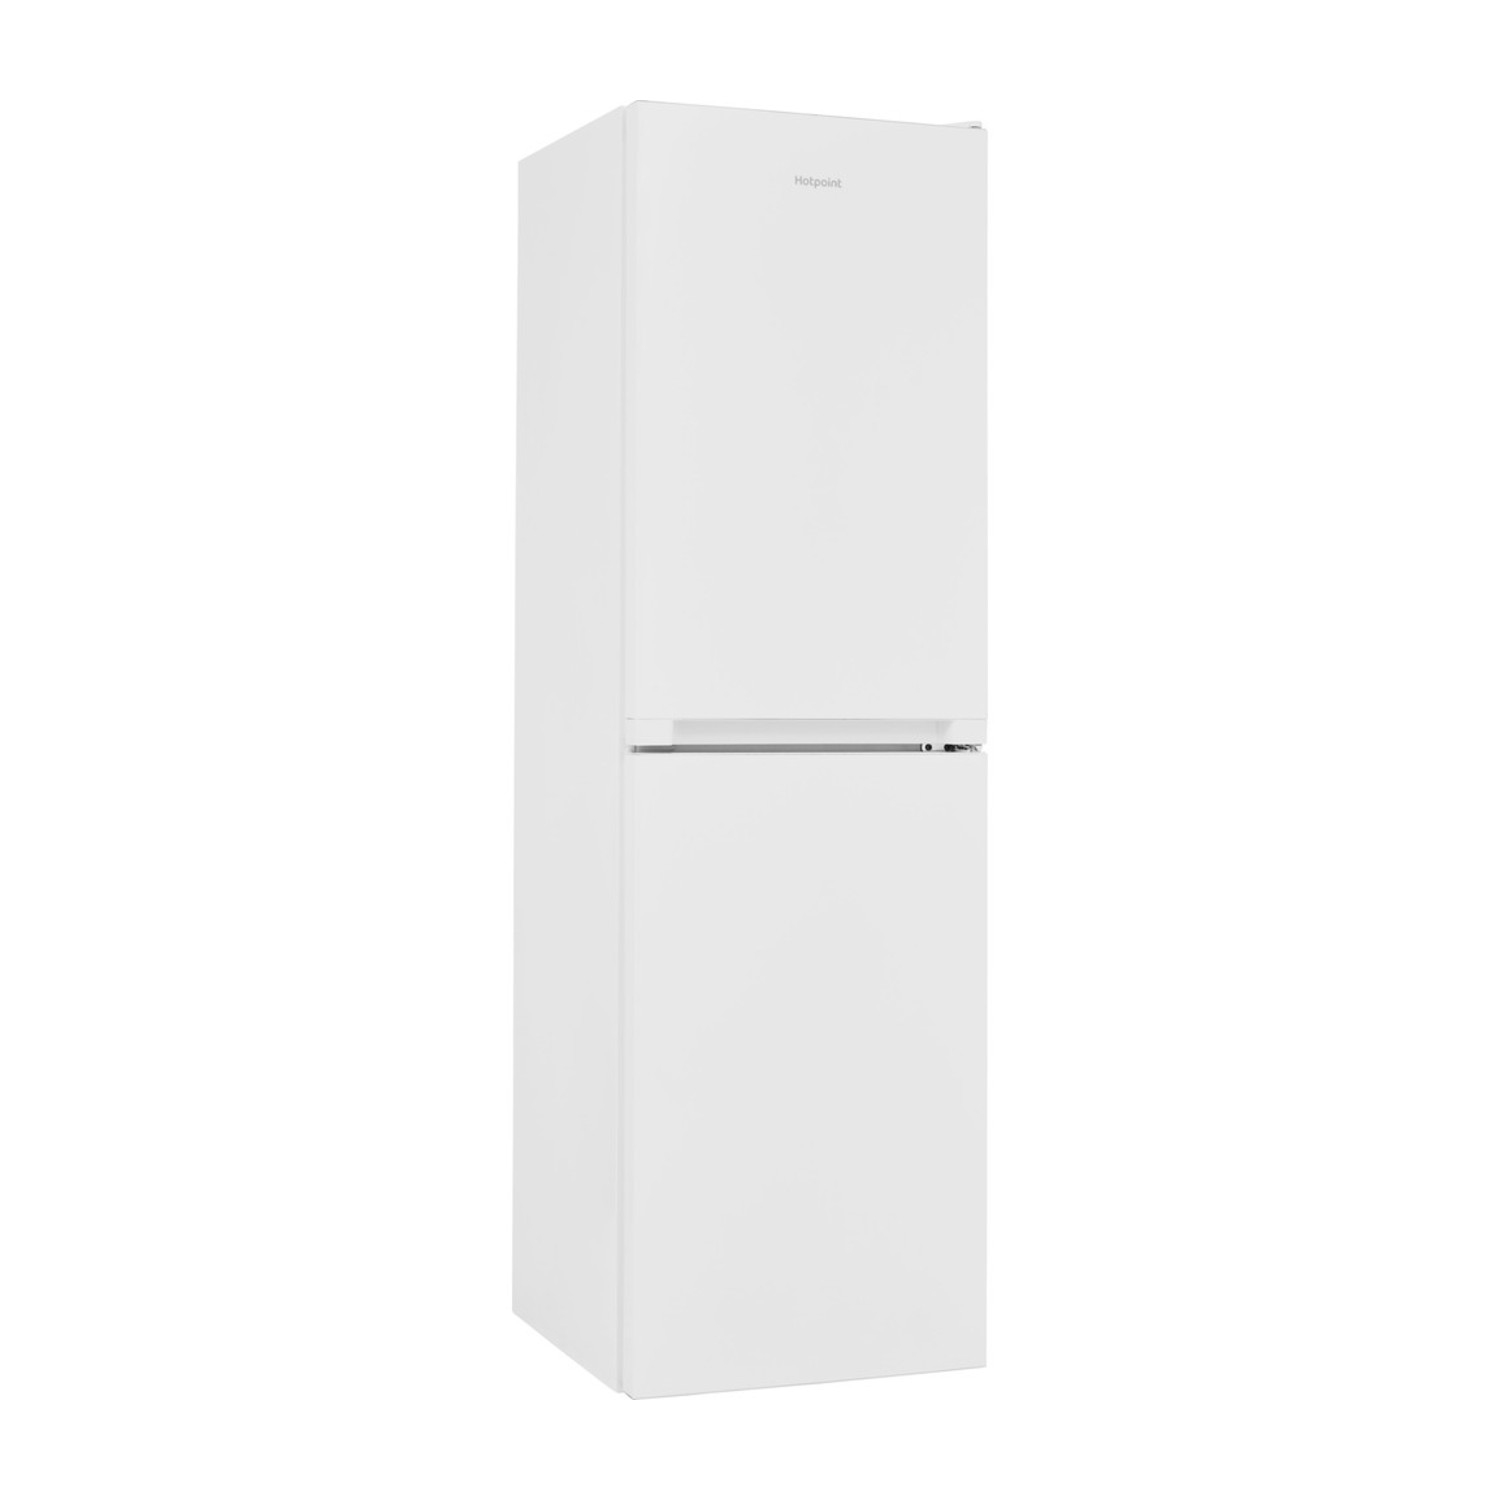 Hotpoint Frost Free Fridge Freezer, 183cm high by 55cm wide, White  - 4